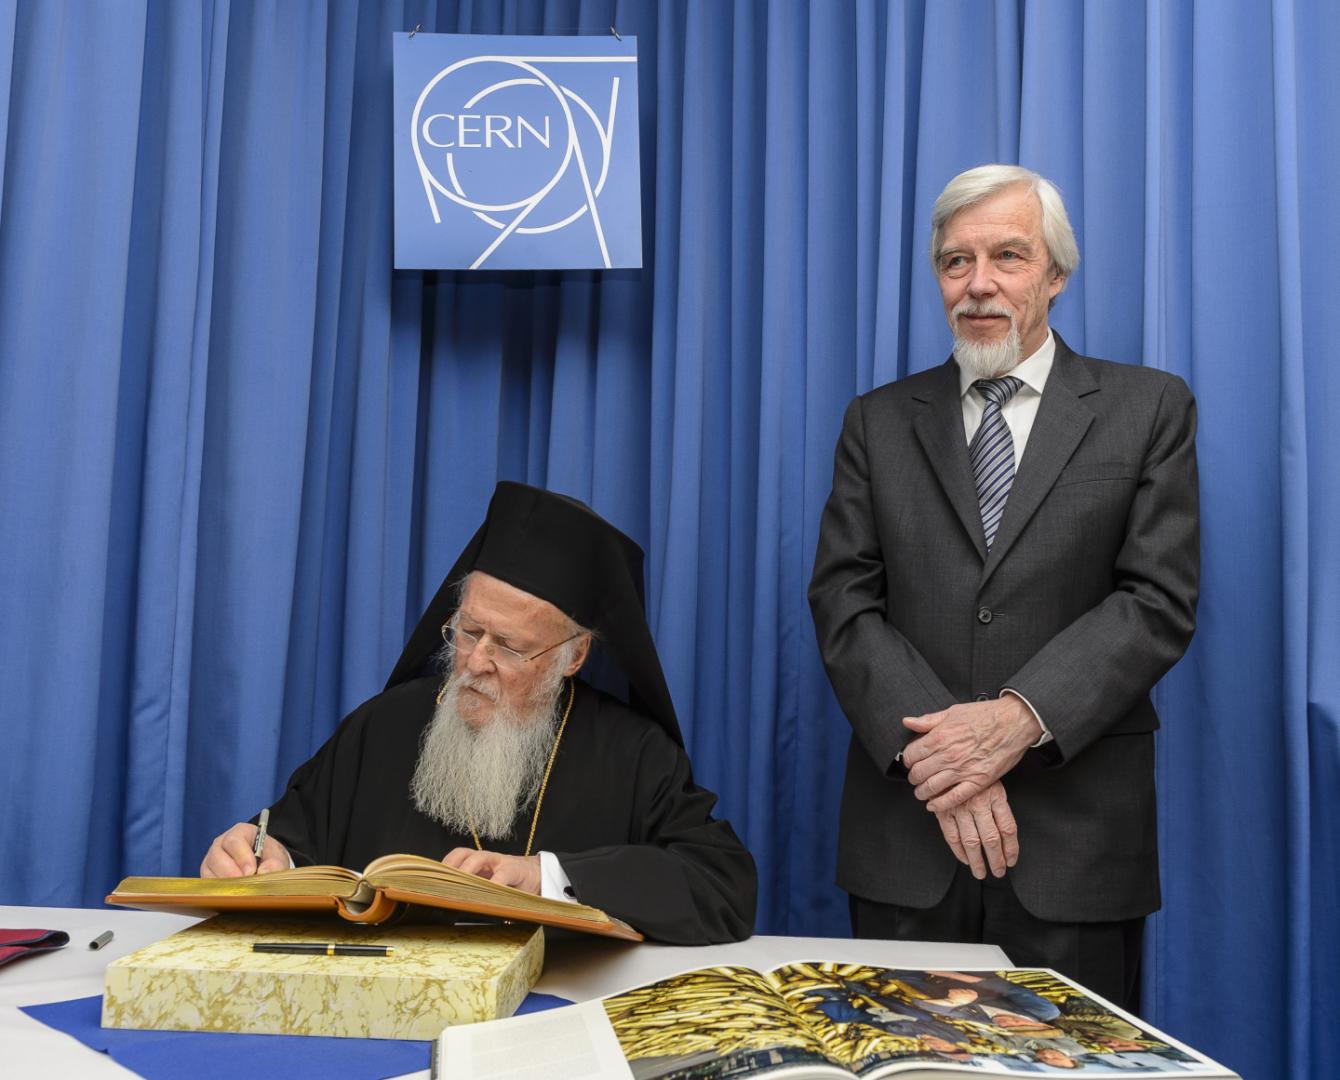 Ecumenical Patriarch visits CERN